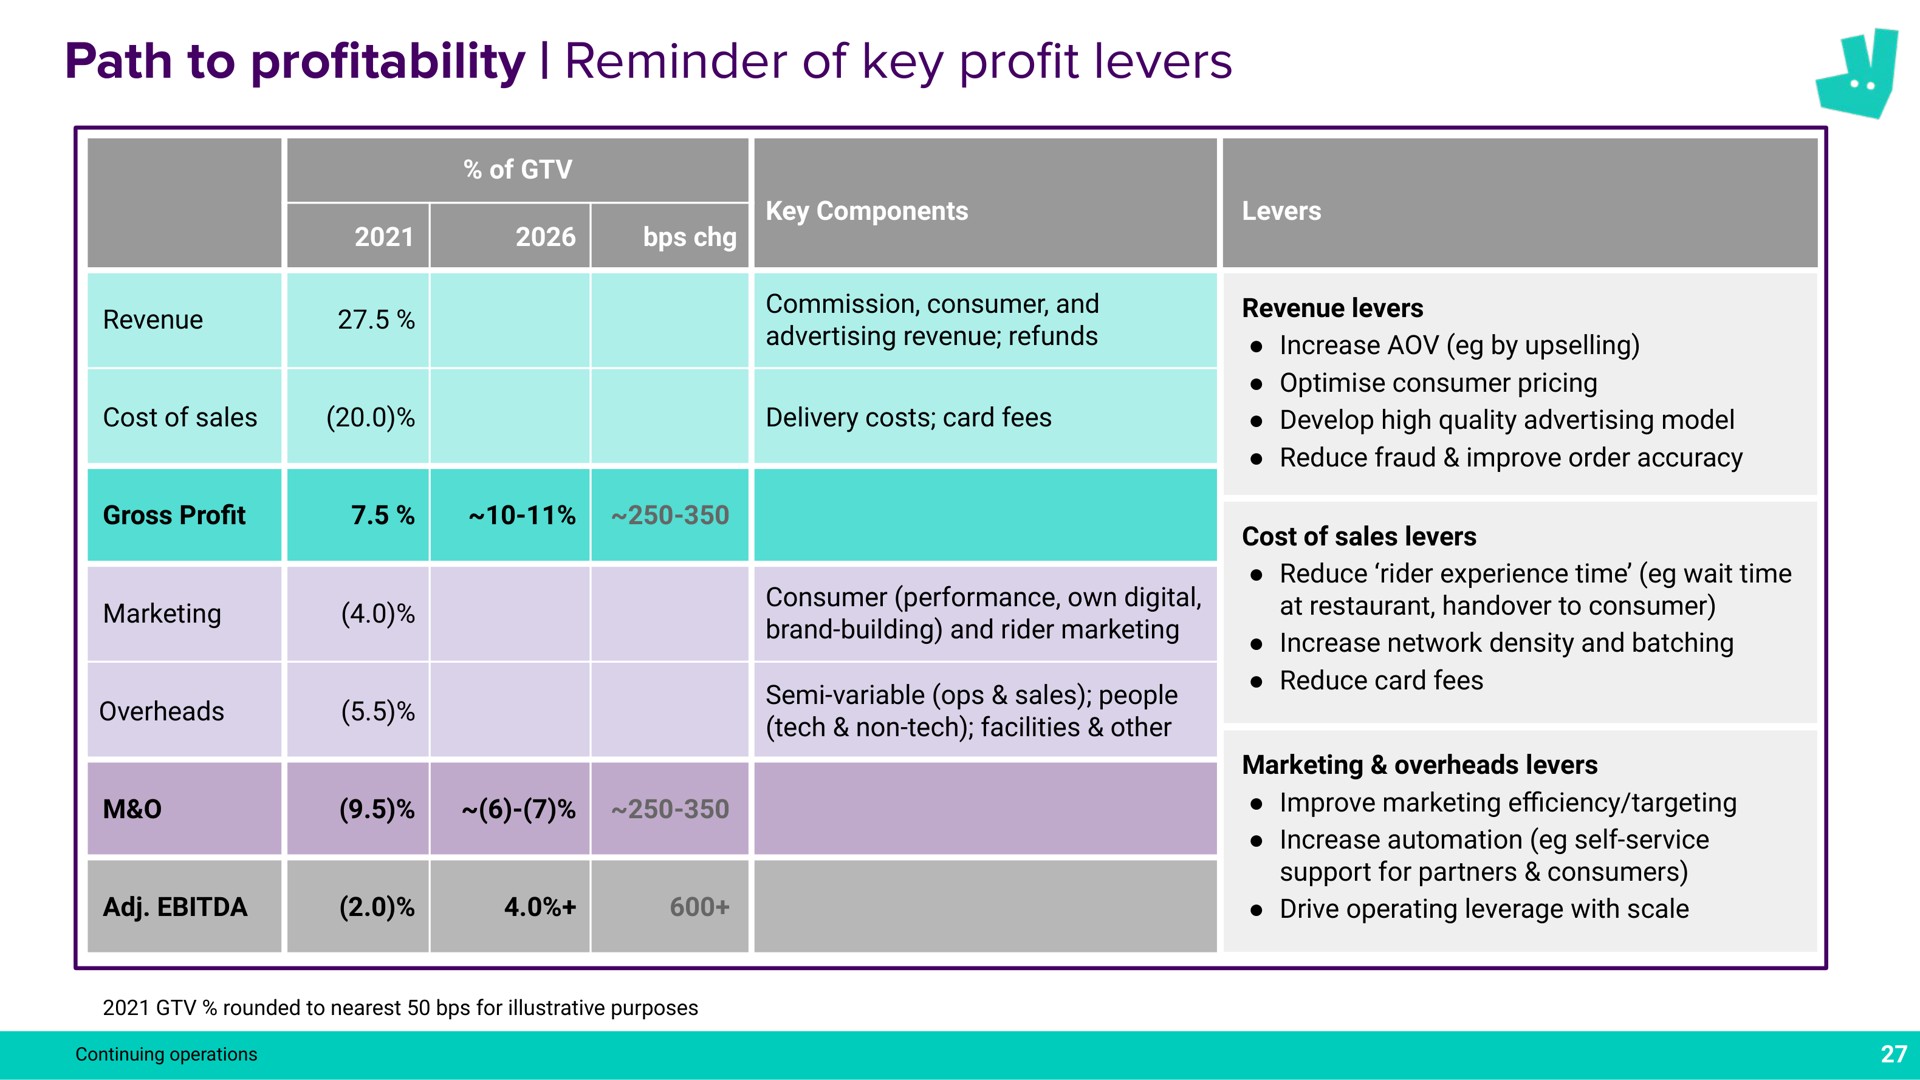 path to pro reminder of key pro levers profitability profit | Deliveroo